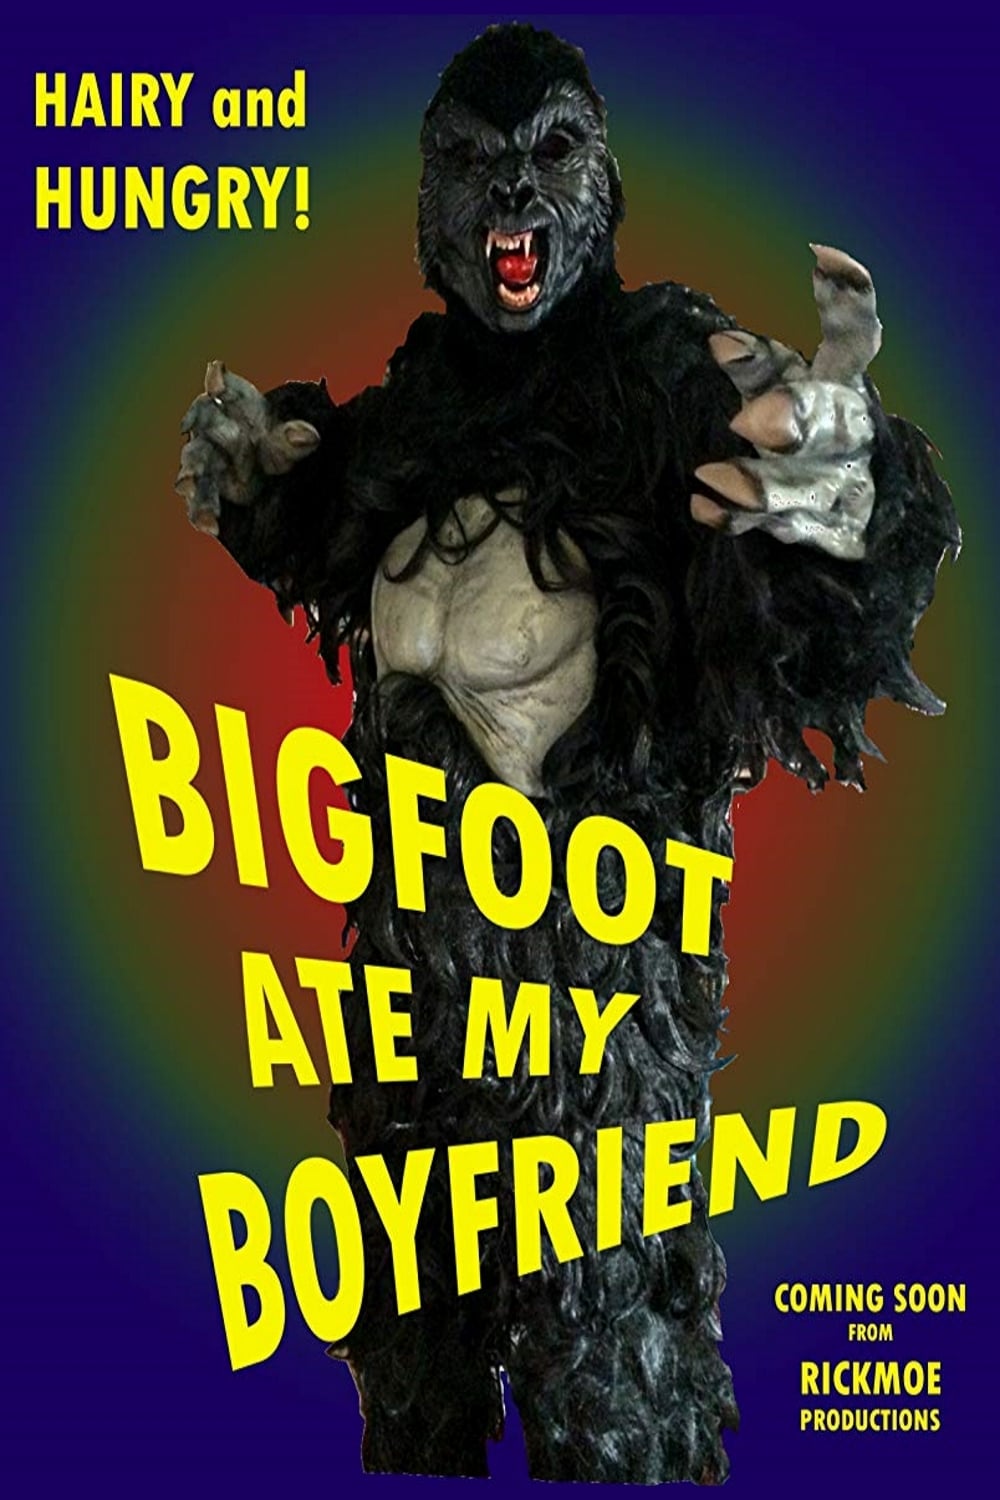 Bigfoot Ate My Boyfriend (2016)